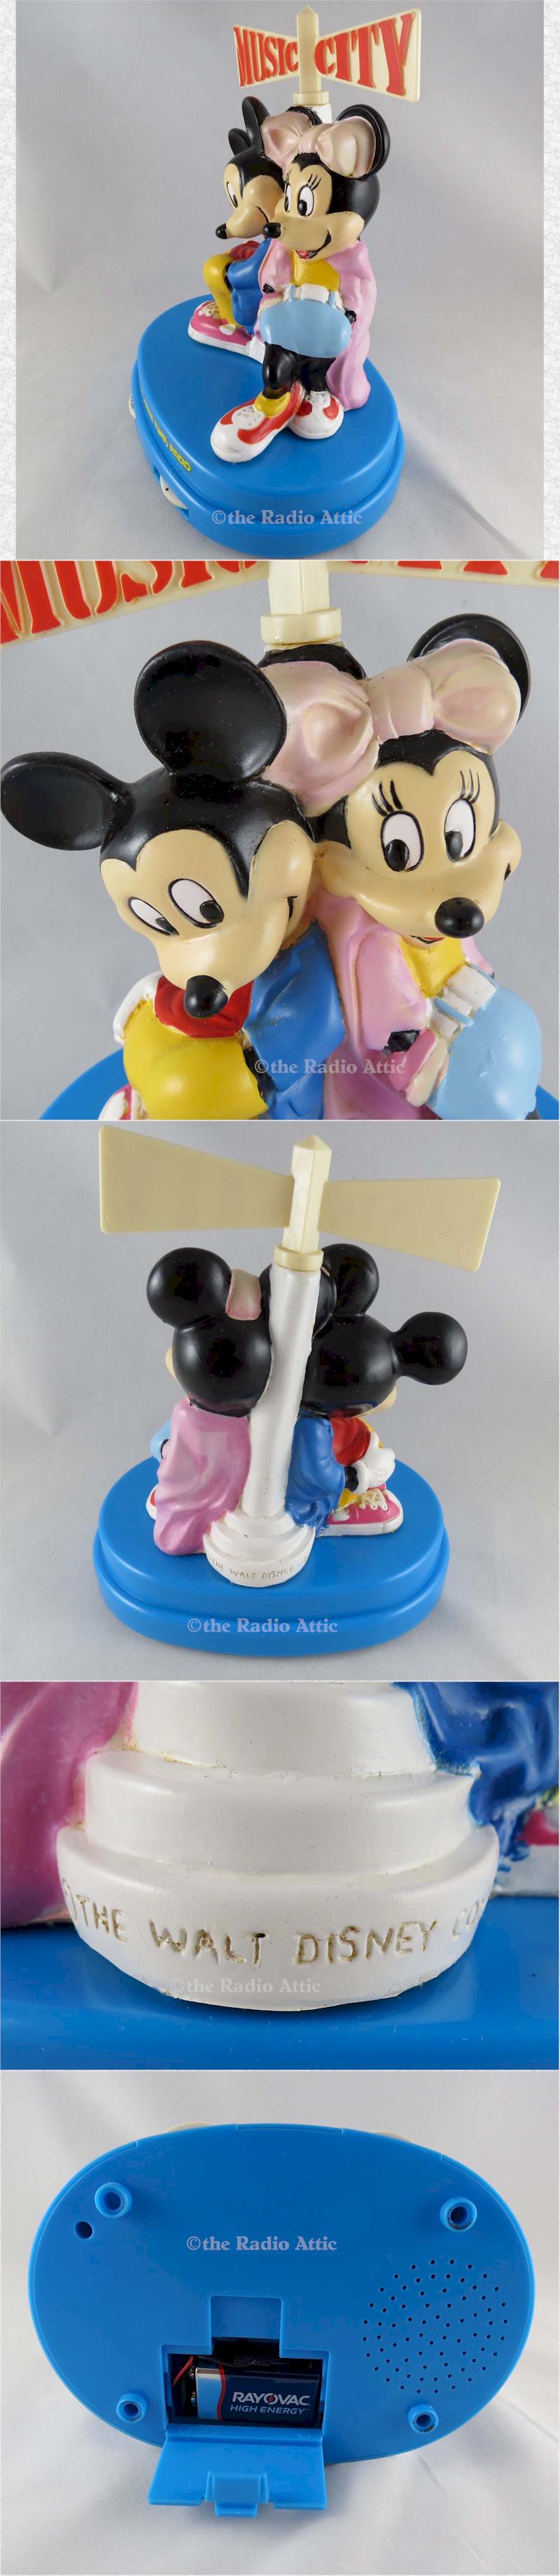 Mickey and Minnie Tunes Radio